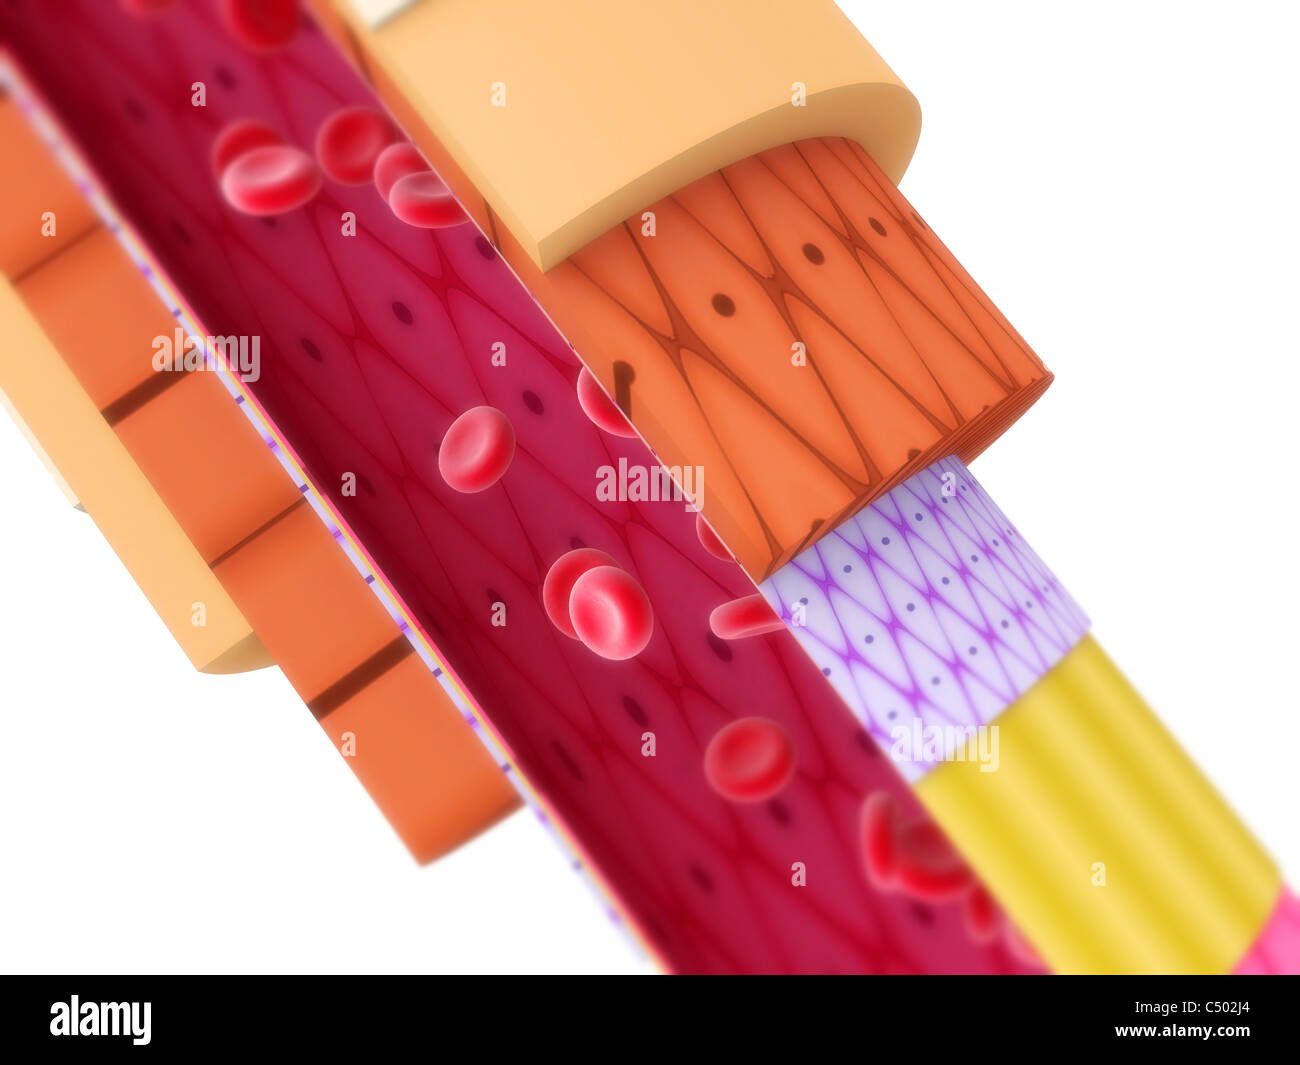 Arterie abgeschnitten Stockfoto